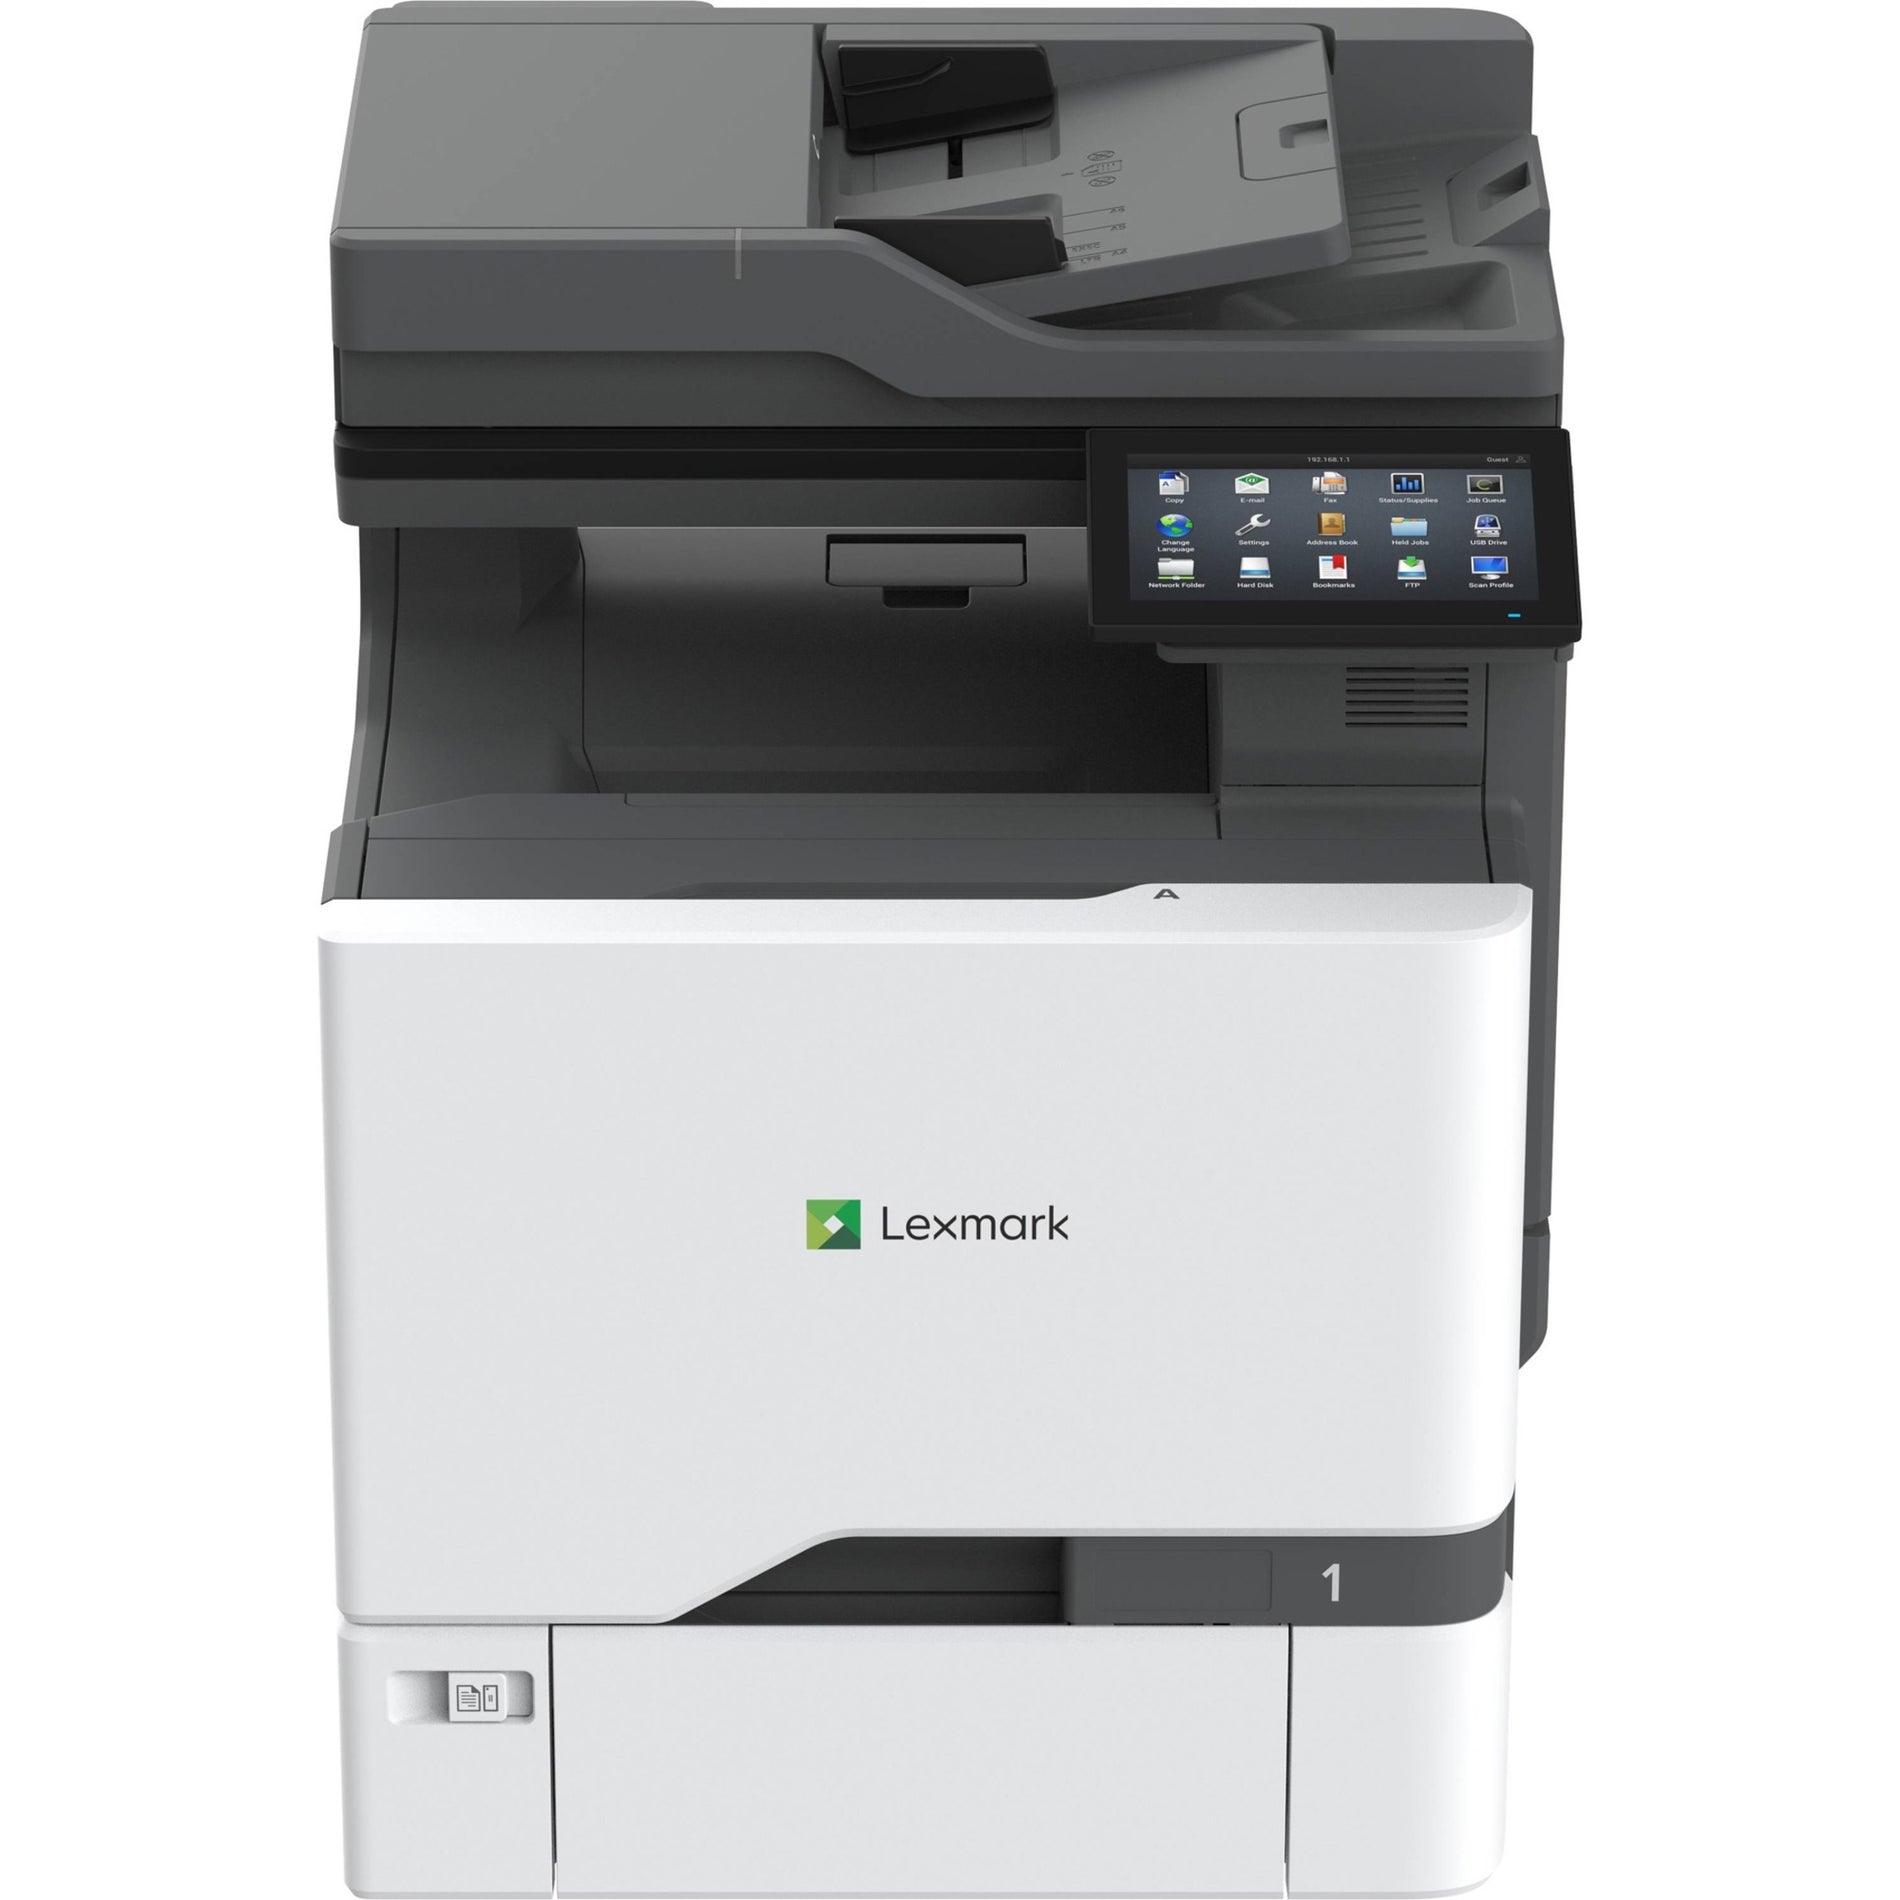 Lexmark 47C9500 CX730de Color Laser Multifunction Printer, Automatic Duplex Printing, 42 ppm Print Speed, 2400 x 600 dpi Resolution